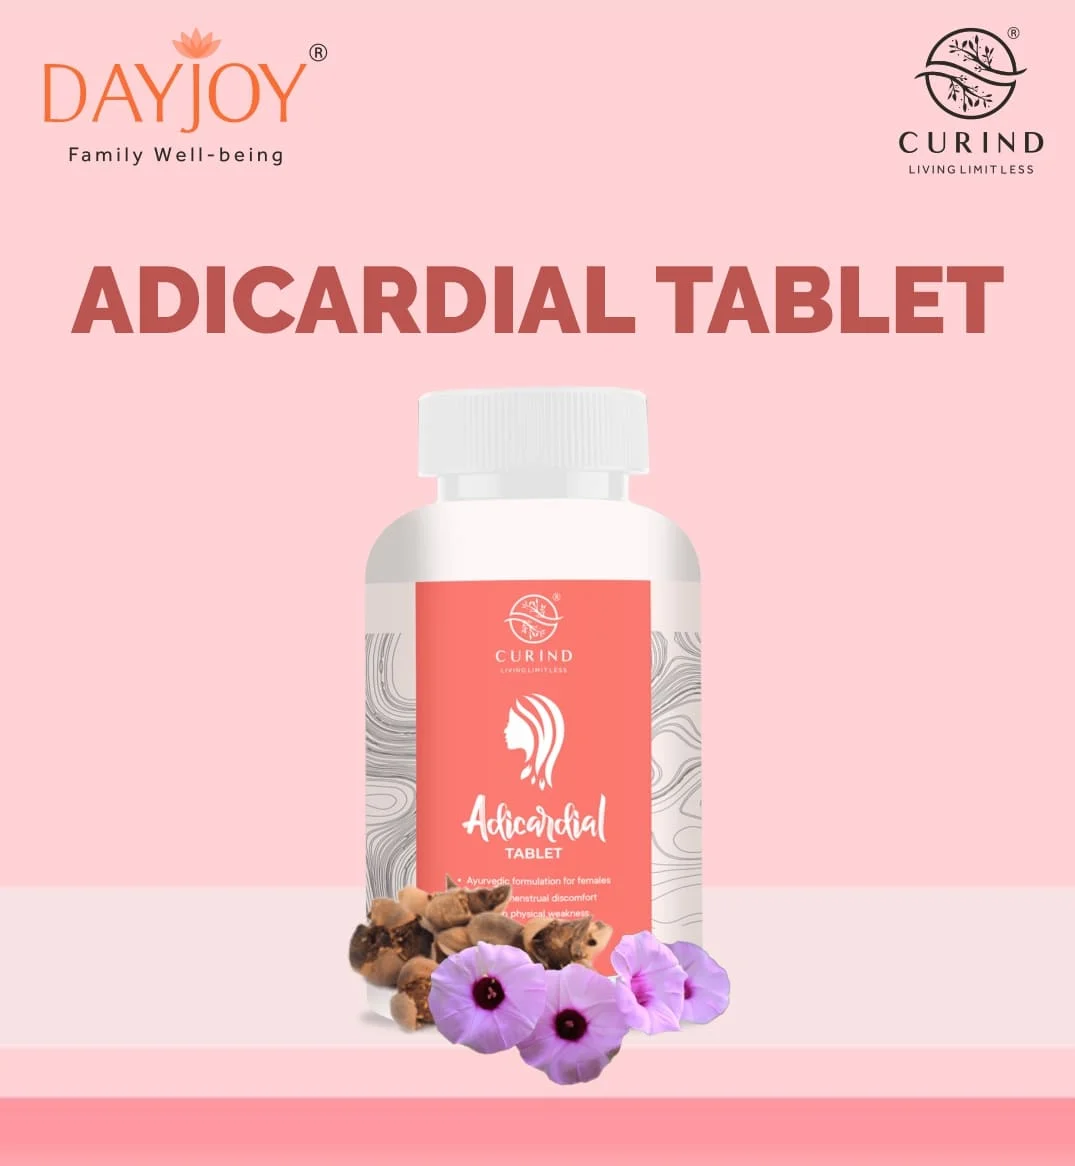 Adicardial Tablets- ayurvedic medicine for women health and immunity